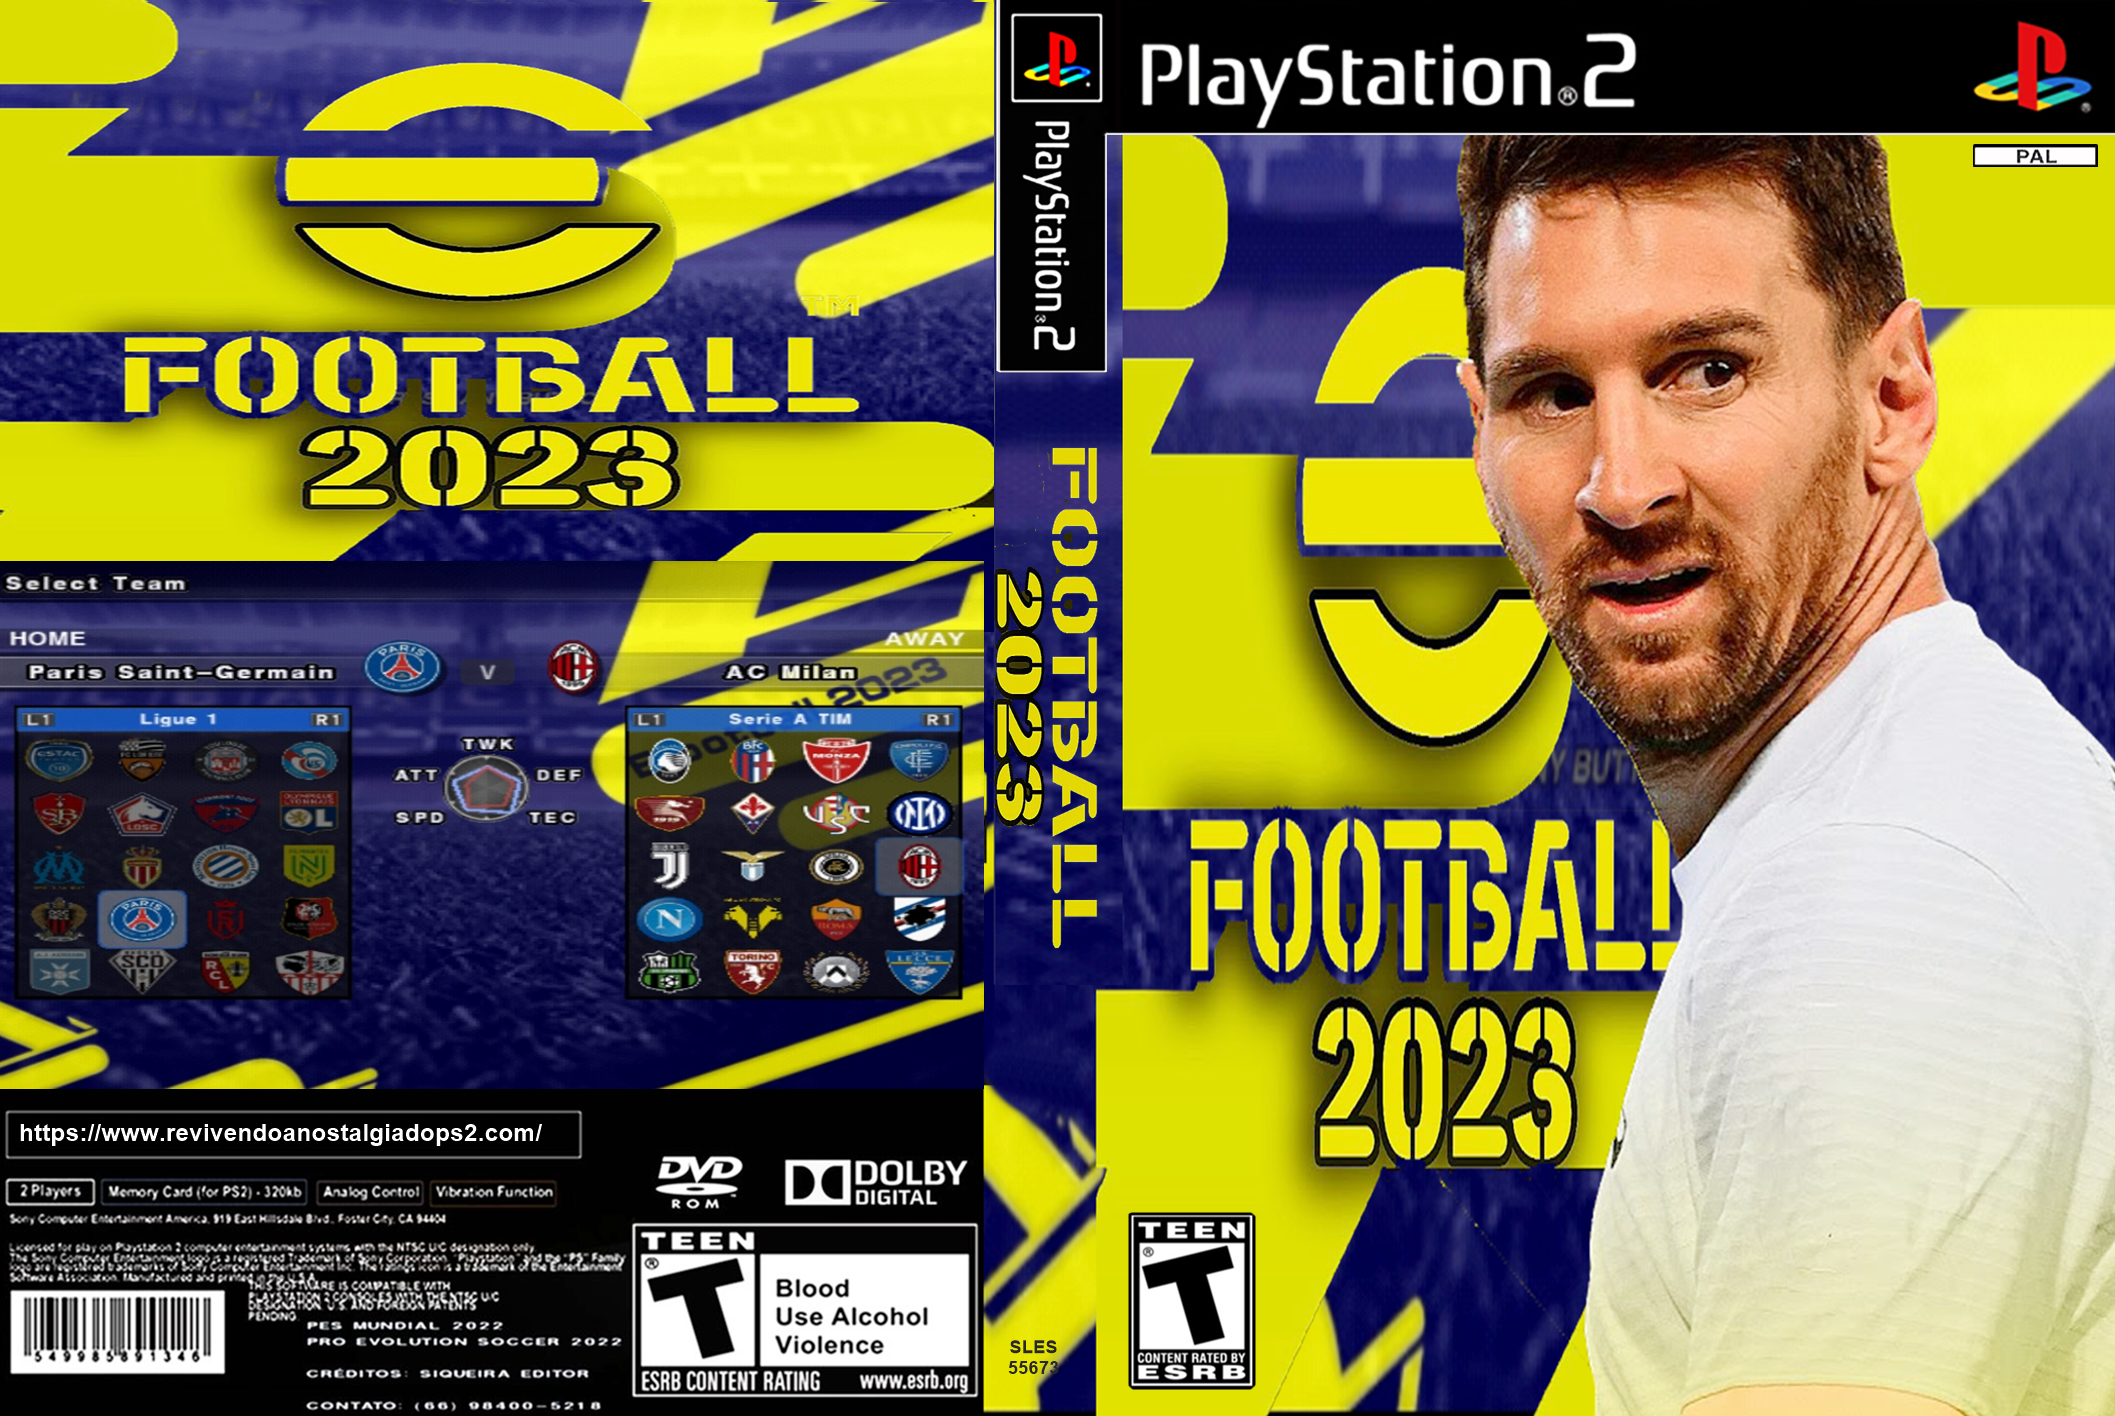 PES 2023 PS2 ISO (Efootball) Atualização playstation 2  AETHERSX2.MOBILE.PCSX2 